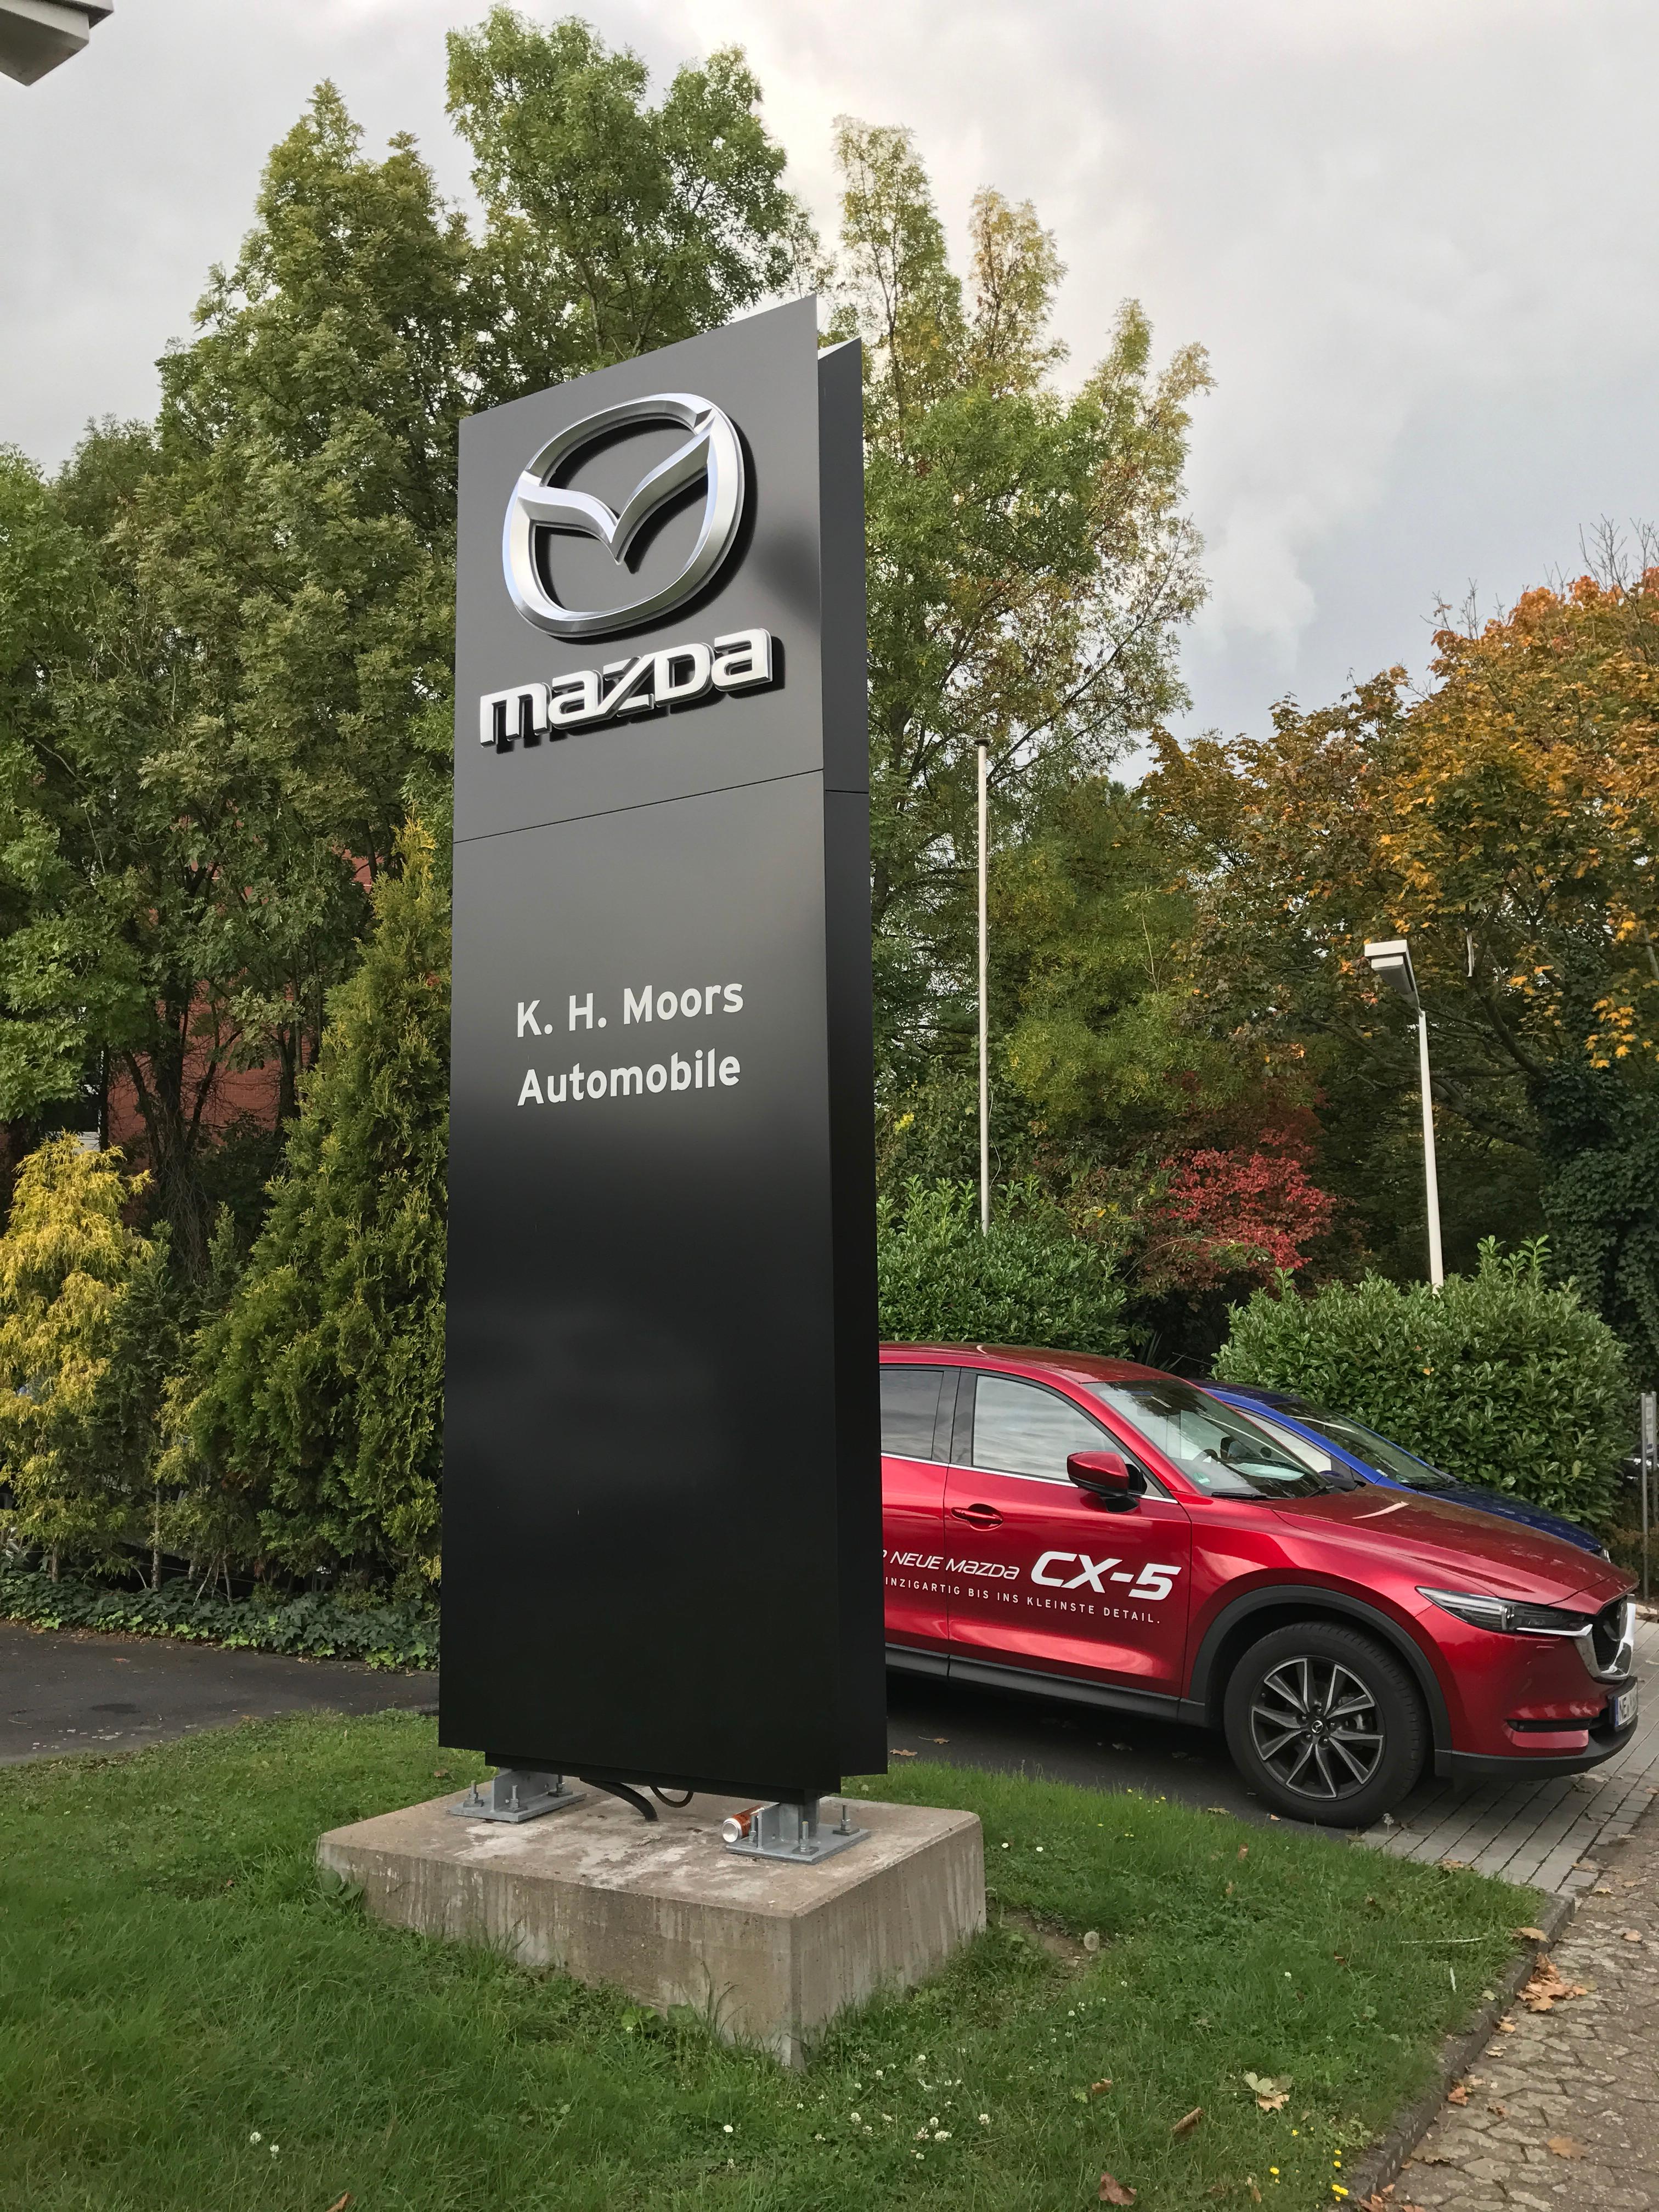 Kundenbild groß 9 K.H. Moors GmbH Automobile Mazda-Händler